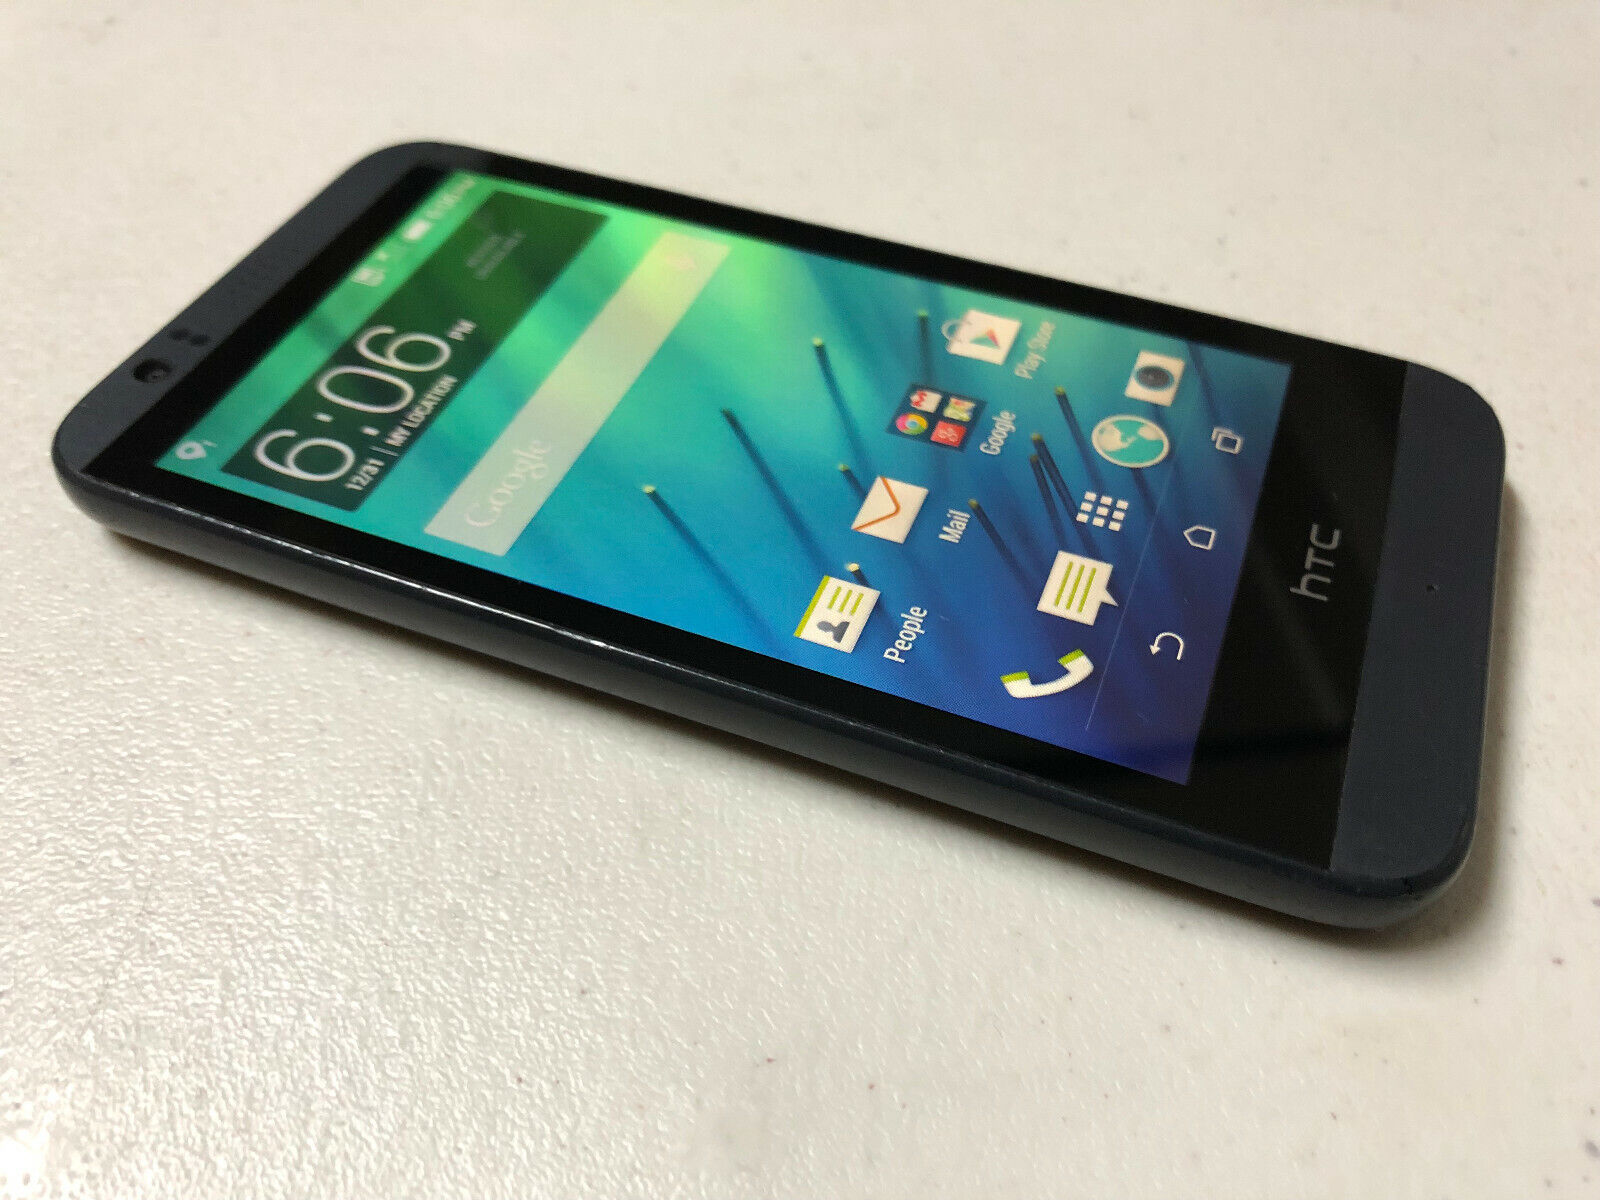 HTC Desire 510 - 8GB - Black (Cricket) Android Smartphone HTC HTC Desire 510